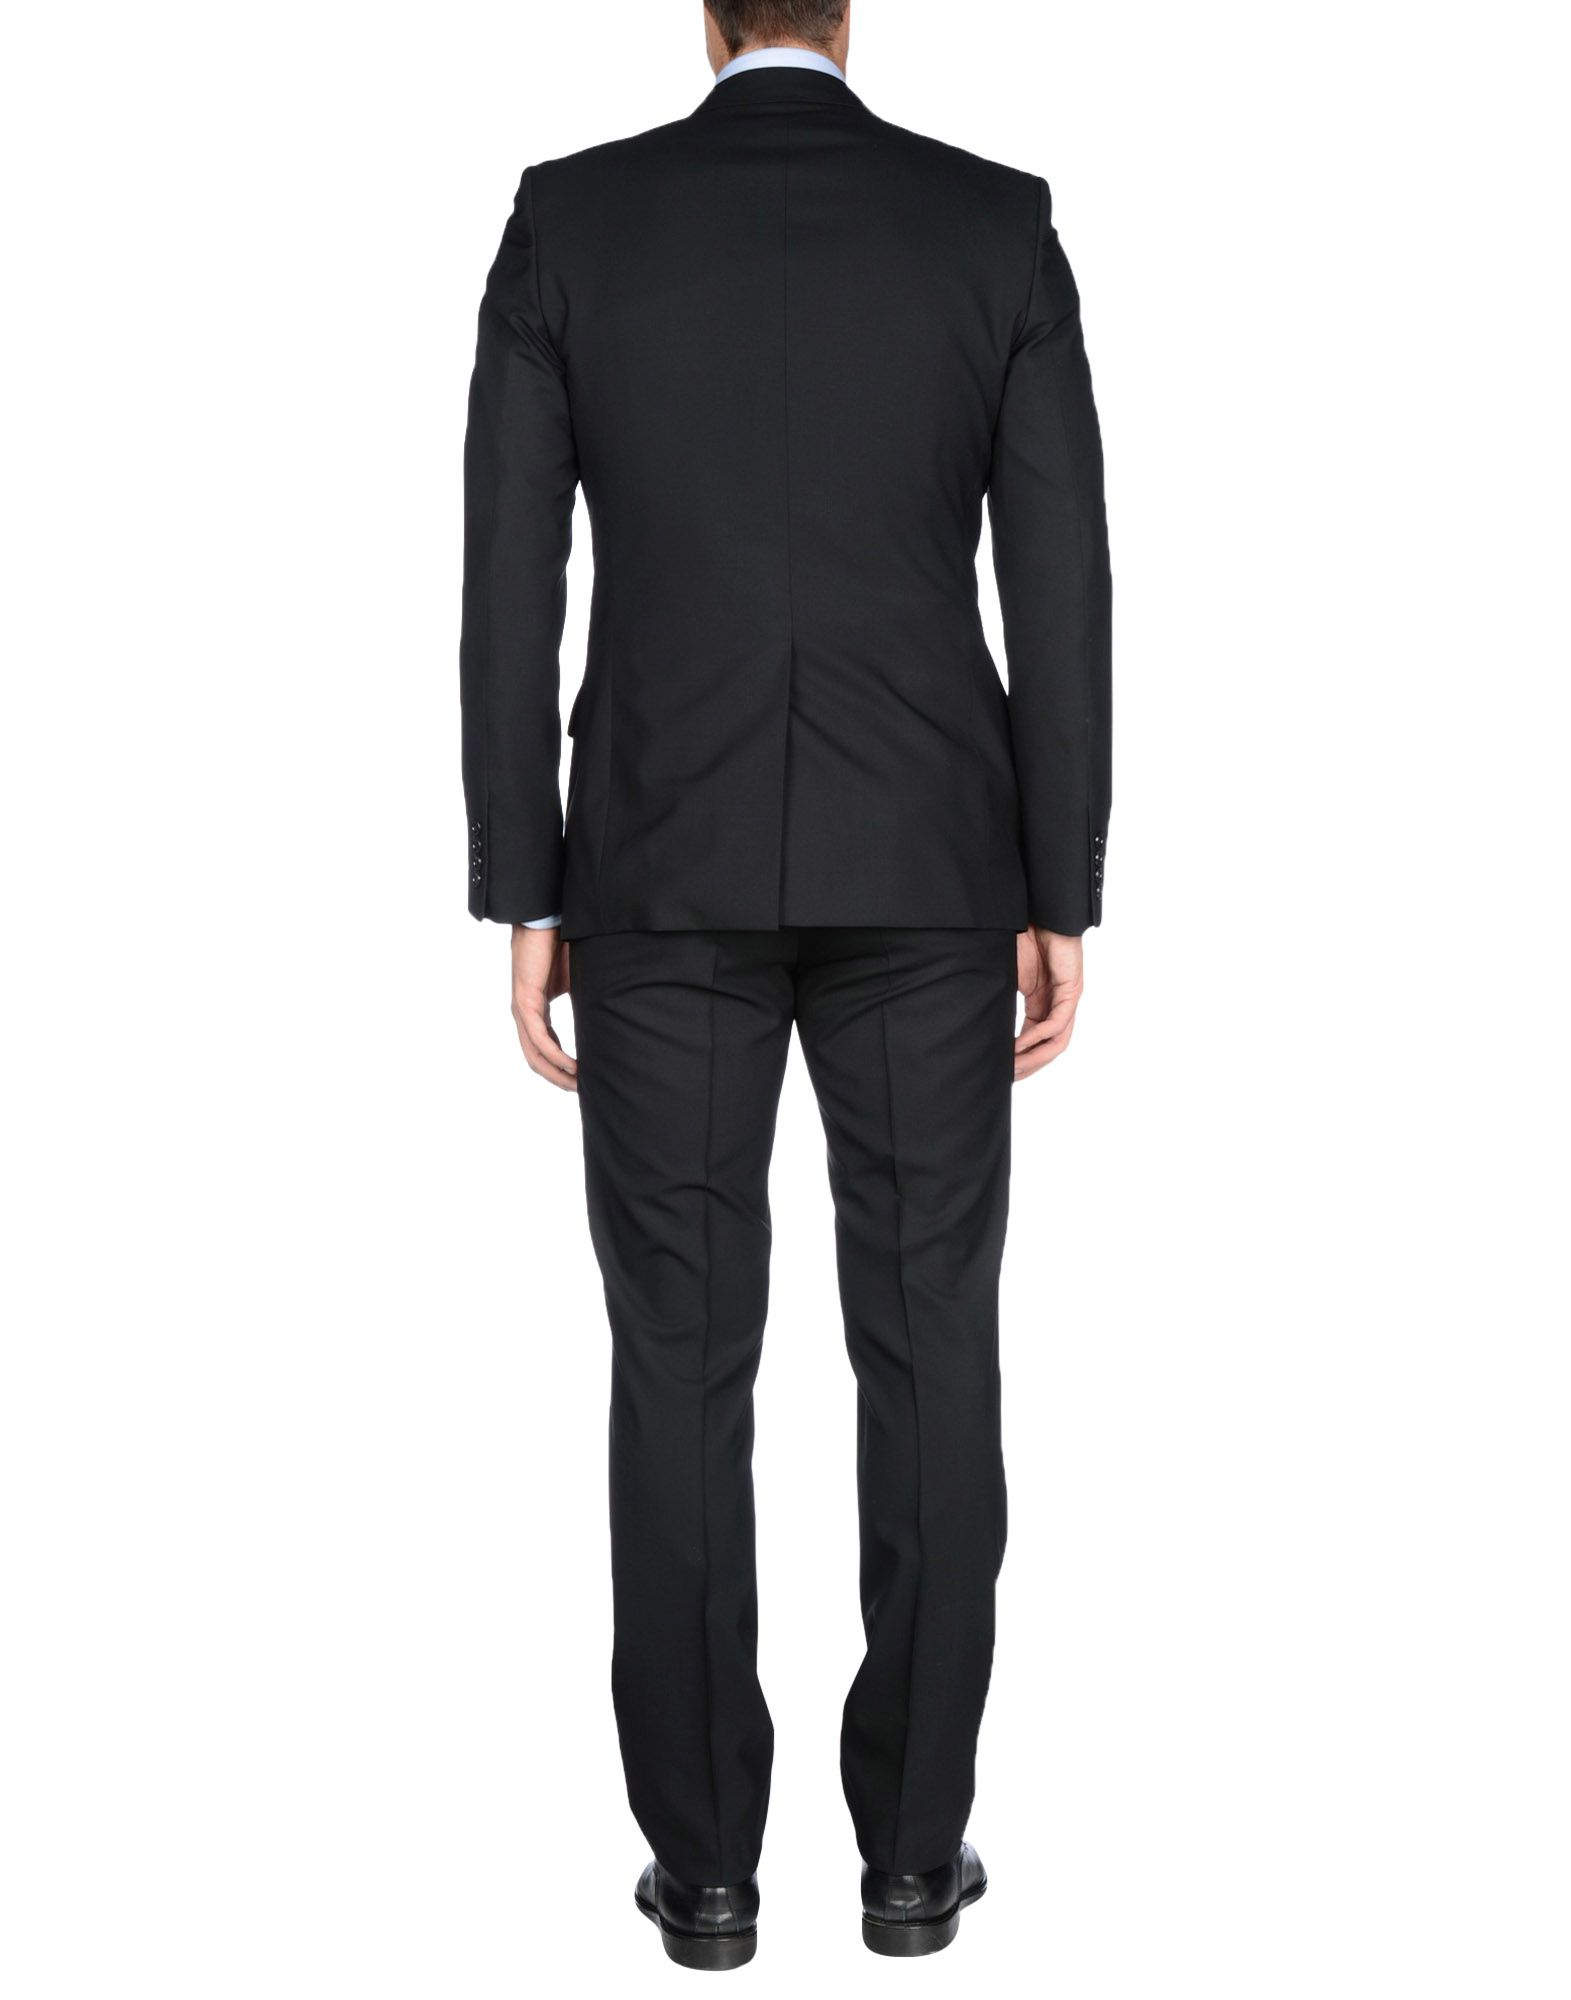 Lyst - Dior Homme Suit in Black for Men